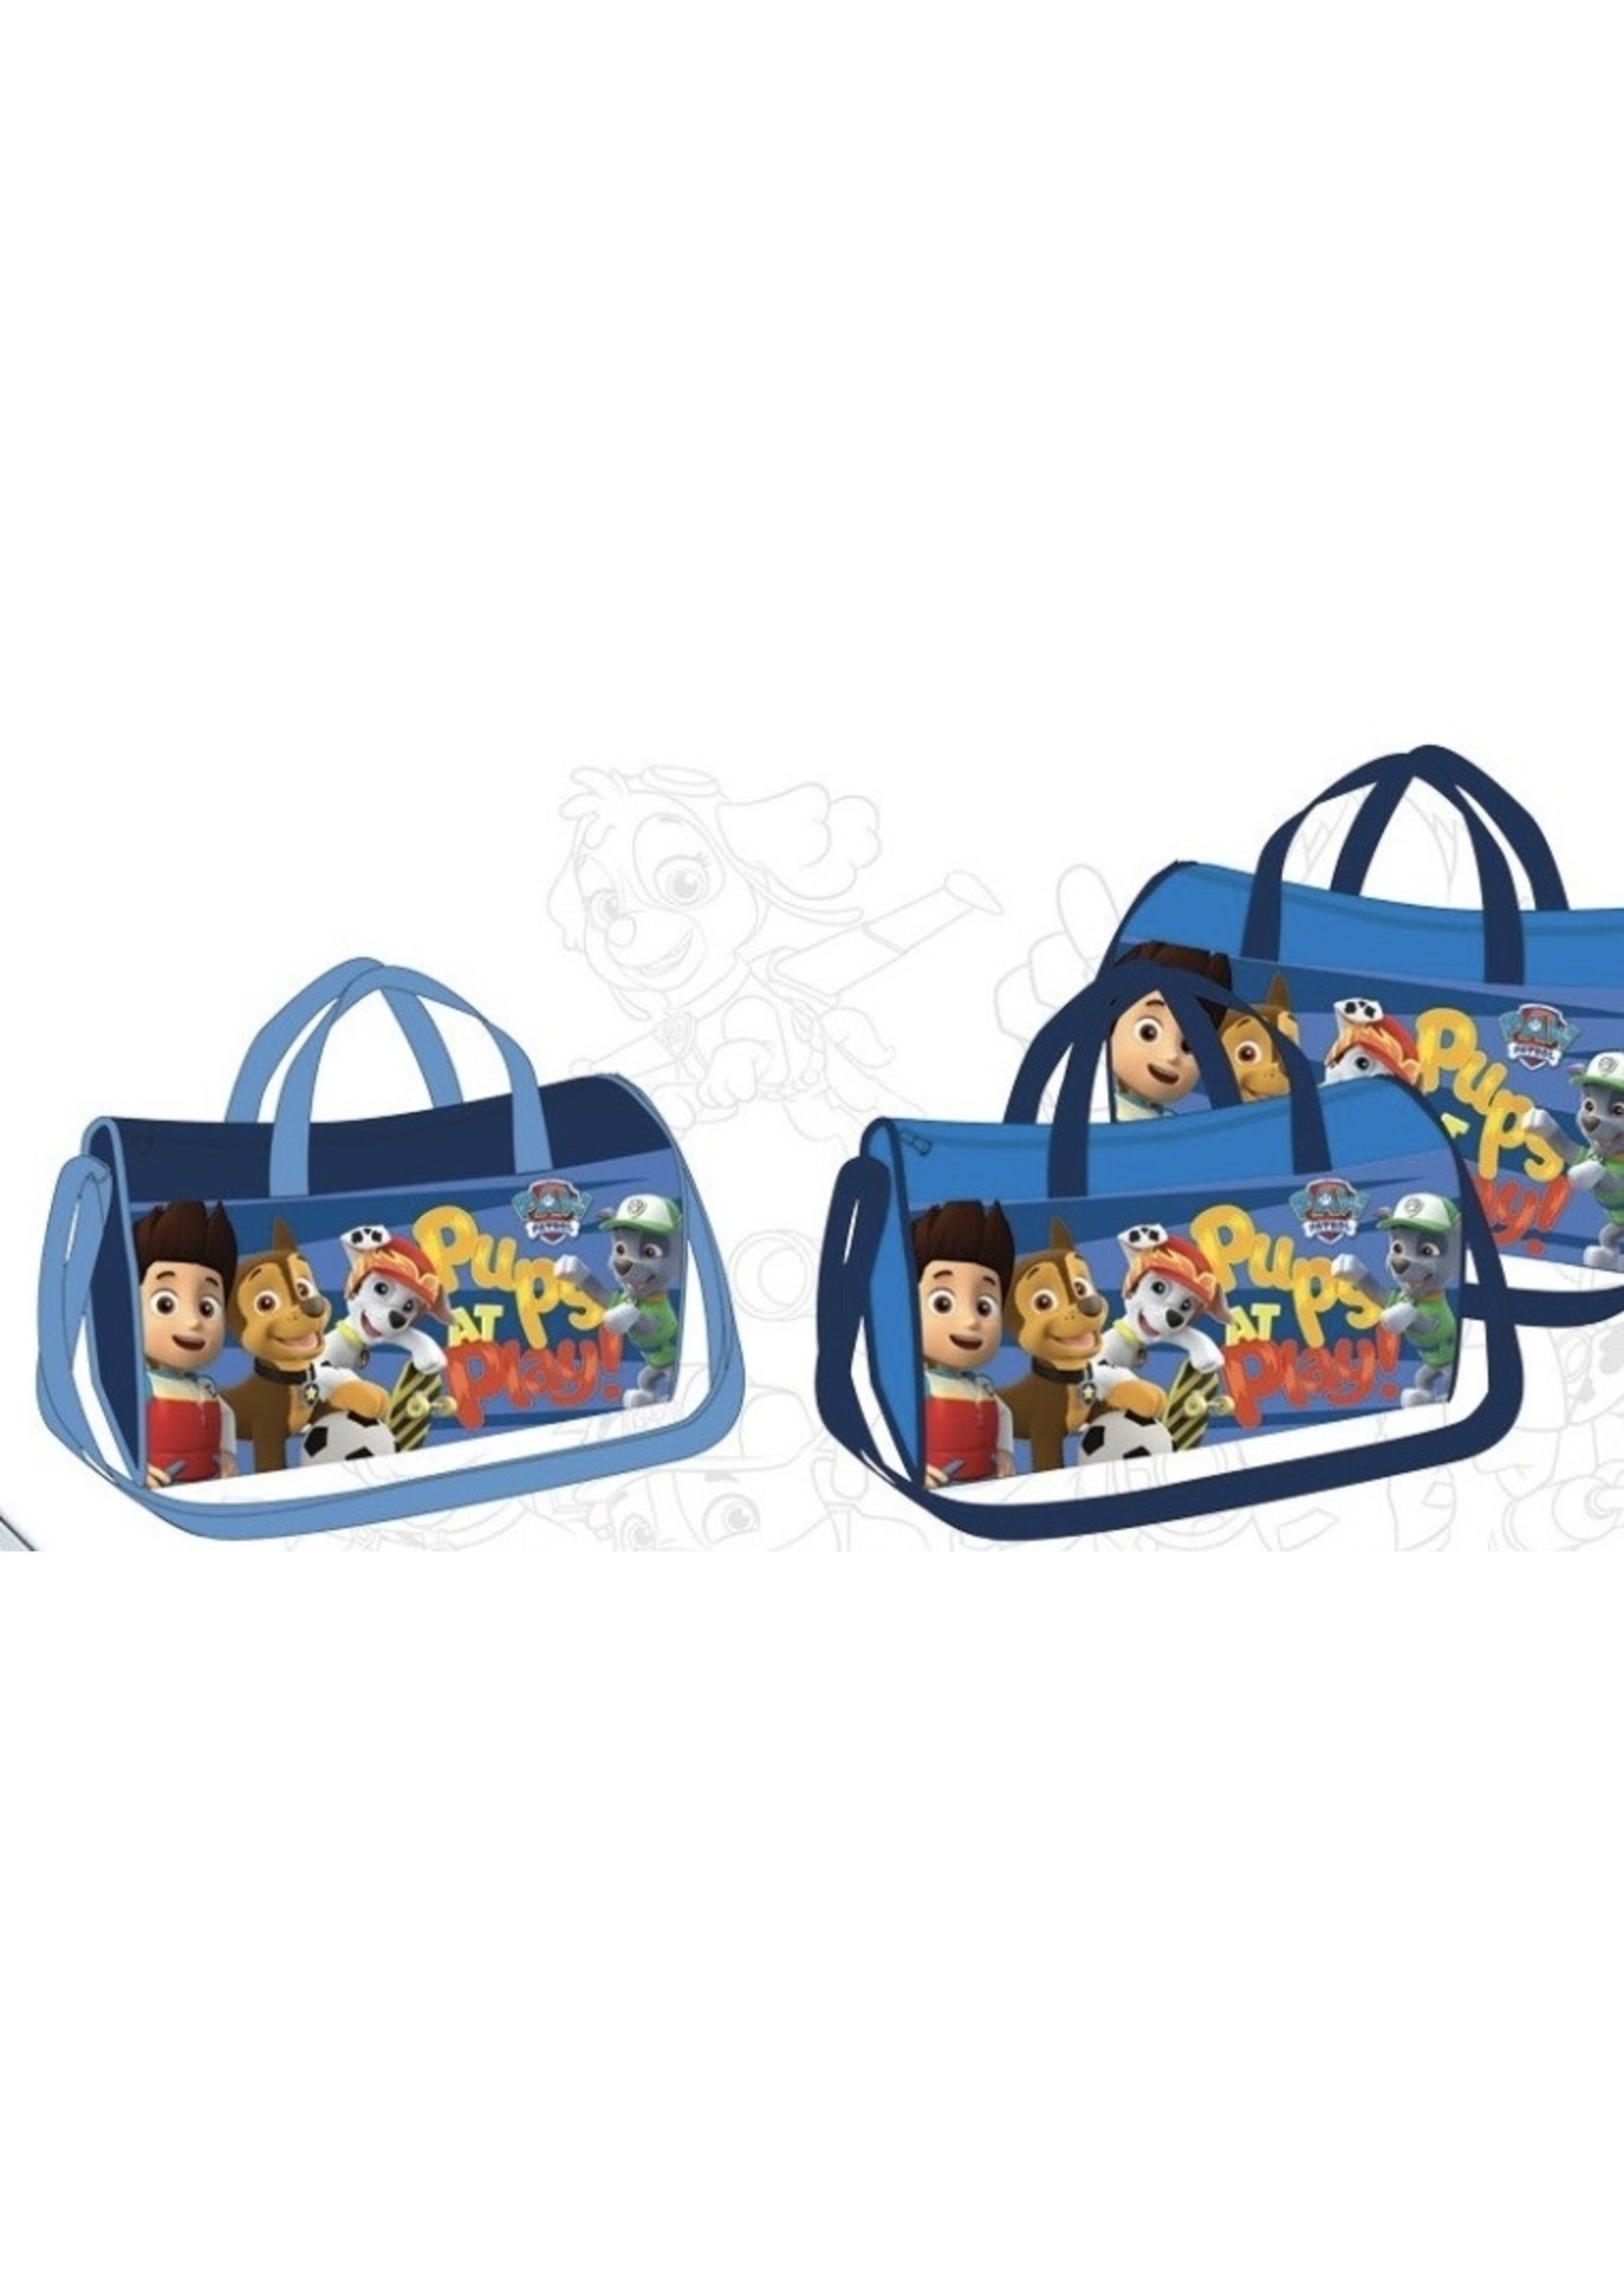 Nickelodeon Paw Patrol sports bag from Nickelodeon blue